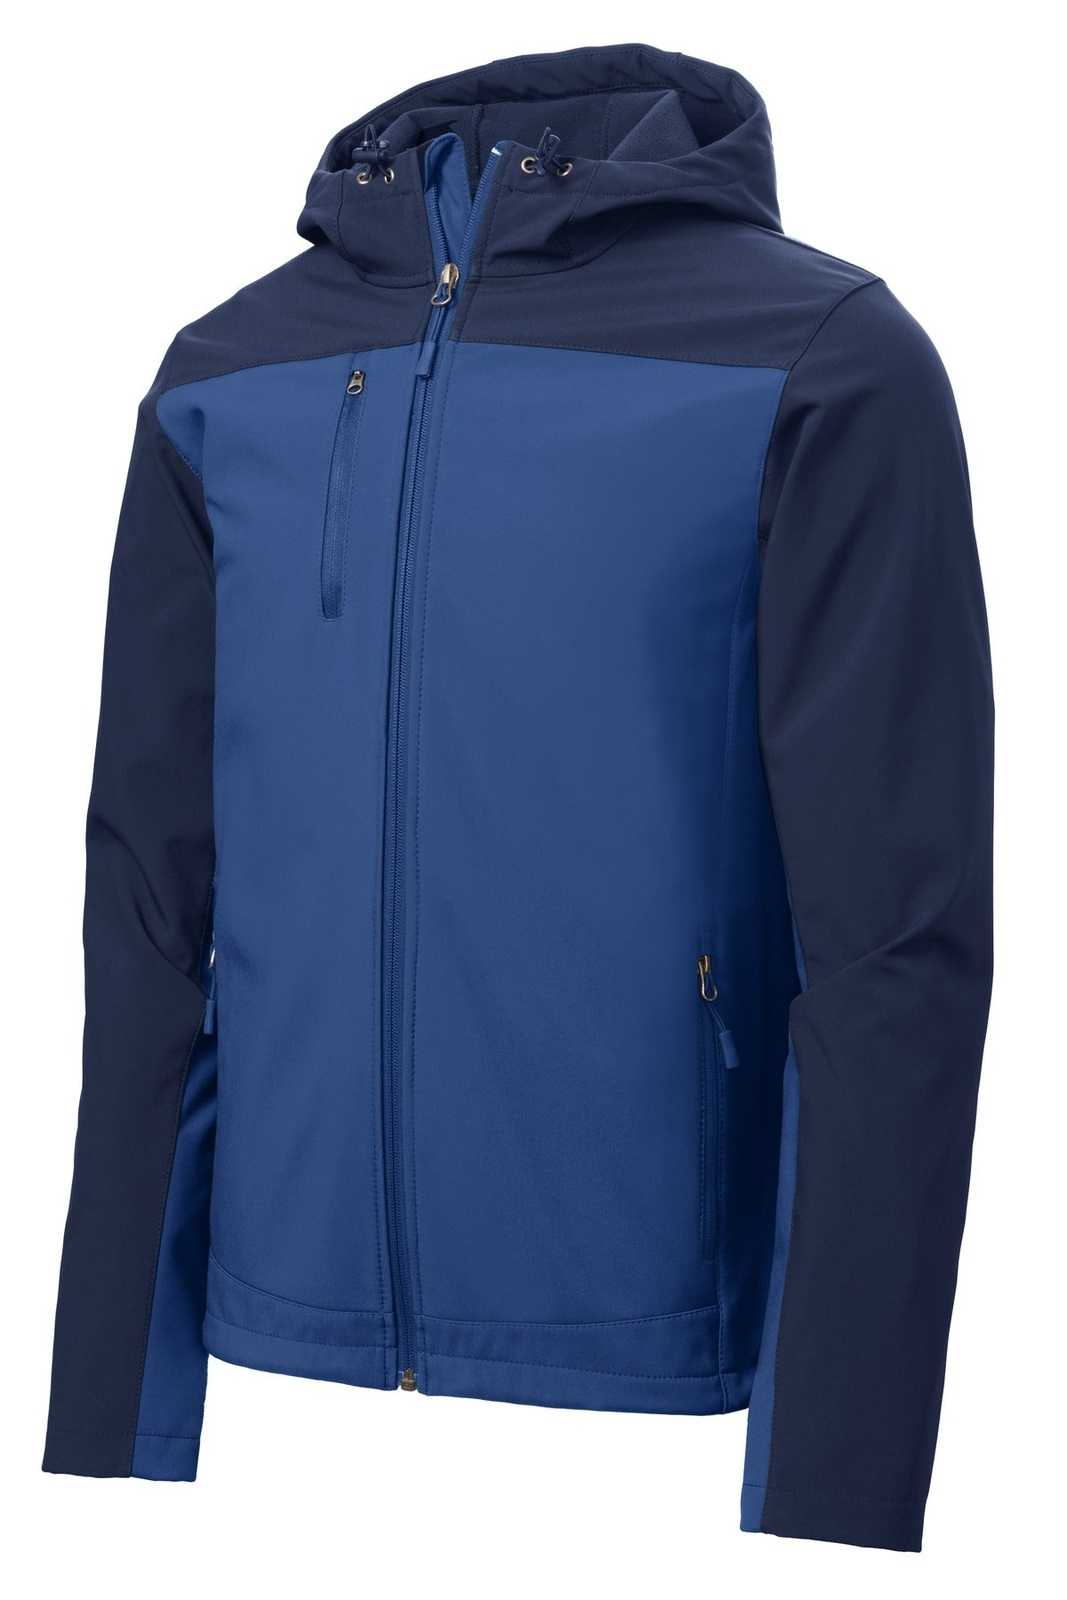 Port Authority J335 Hooded Core Soft Shell Jacket - Night Sky Blue Dress Blue Navy - HIT a Double - 5